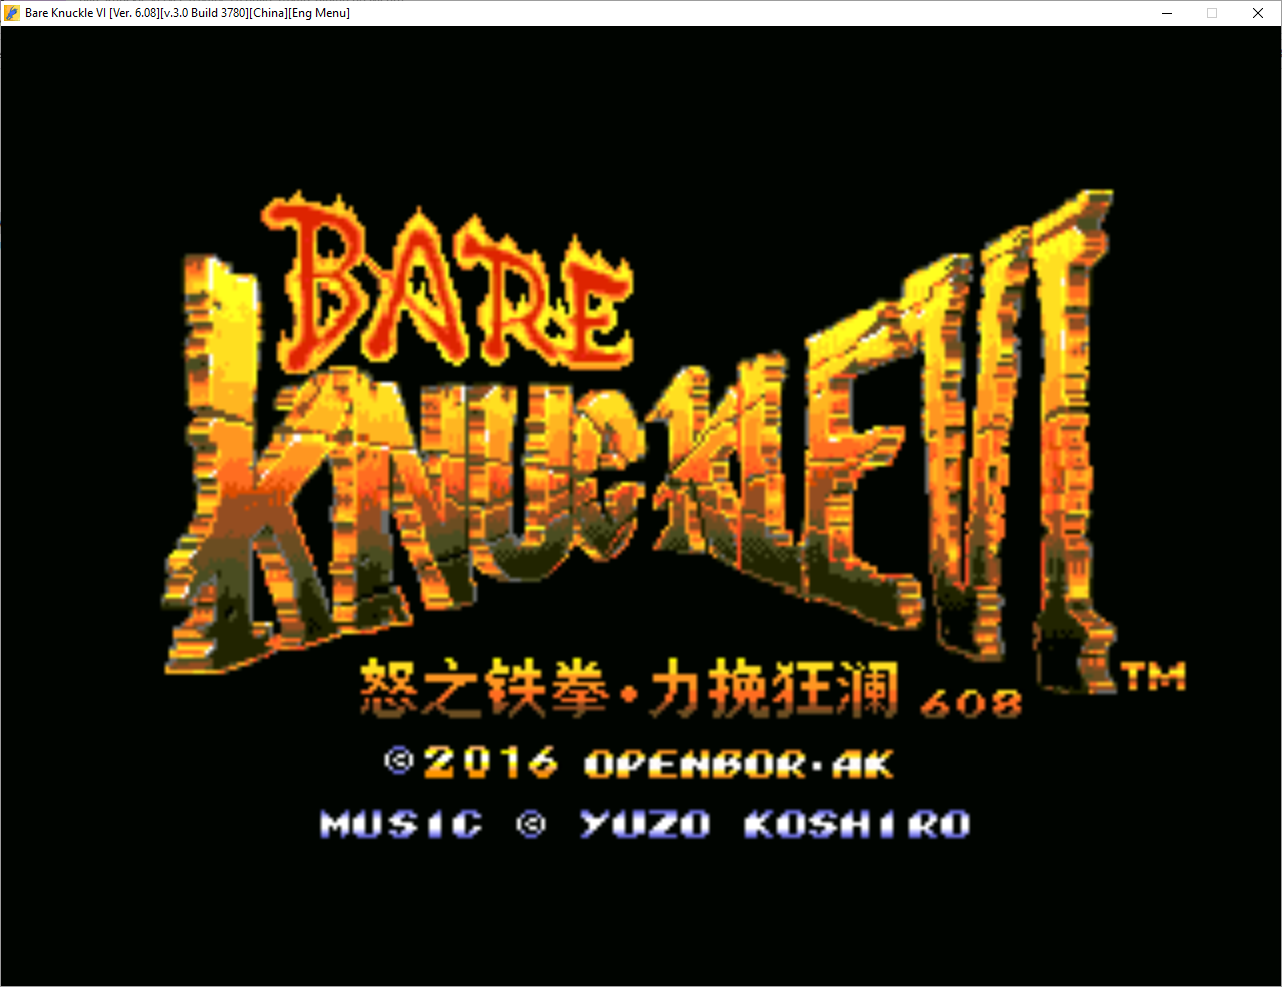 full version of Bare Knuckle VI version 6.08